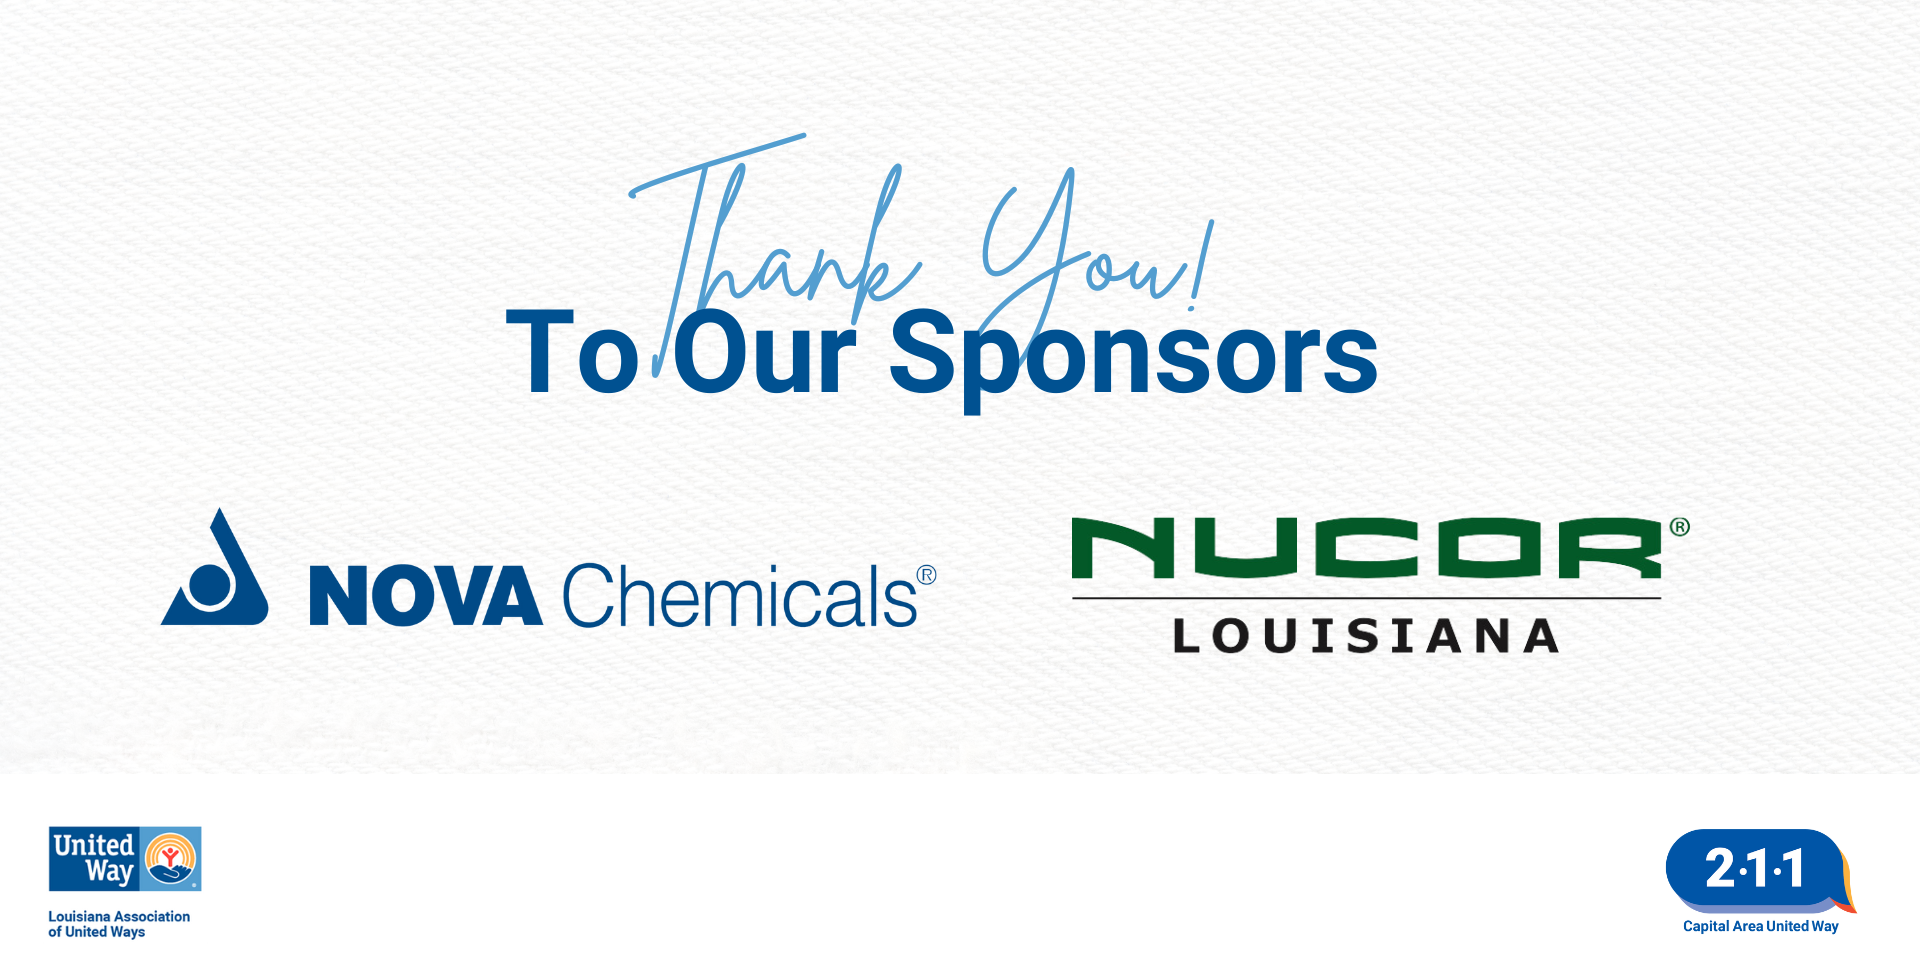 211 Sponsors Nucor Steel Louisiana and NOVA Chemicals